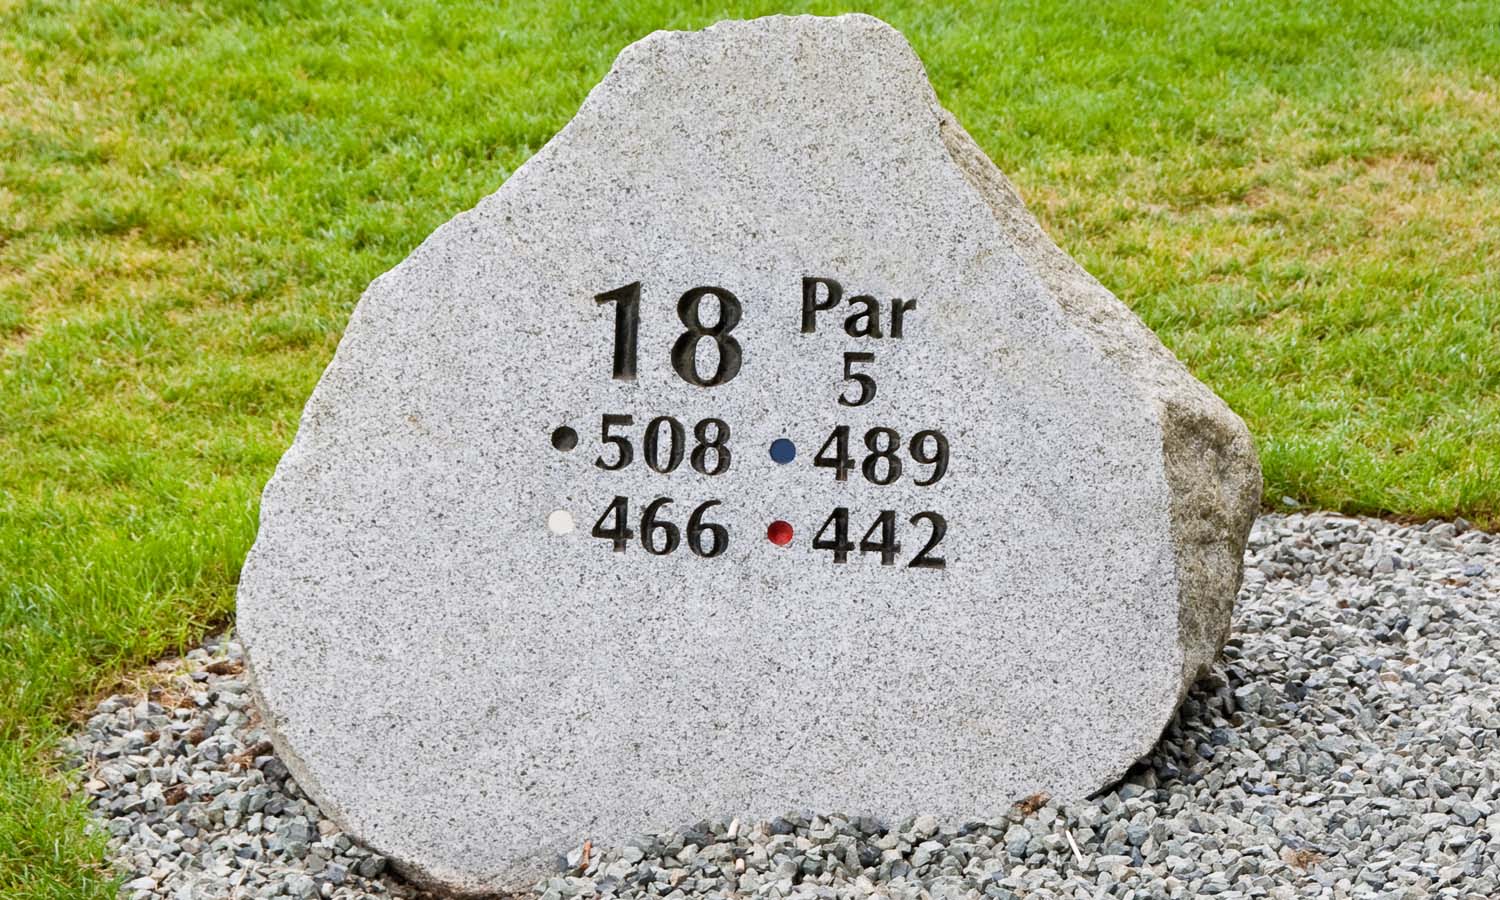 stone marker list the par of a golf hole